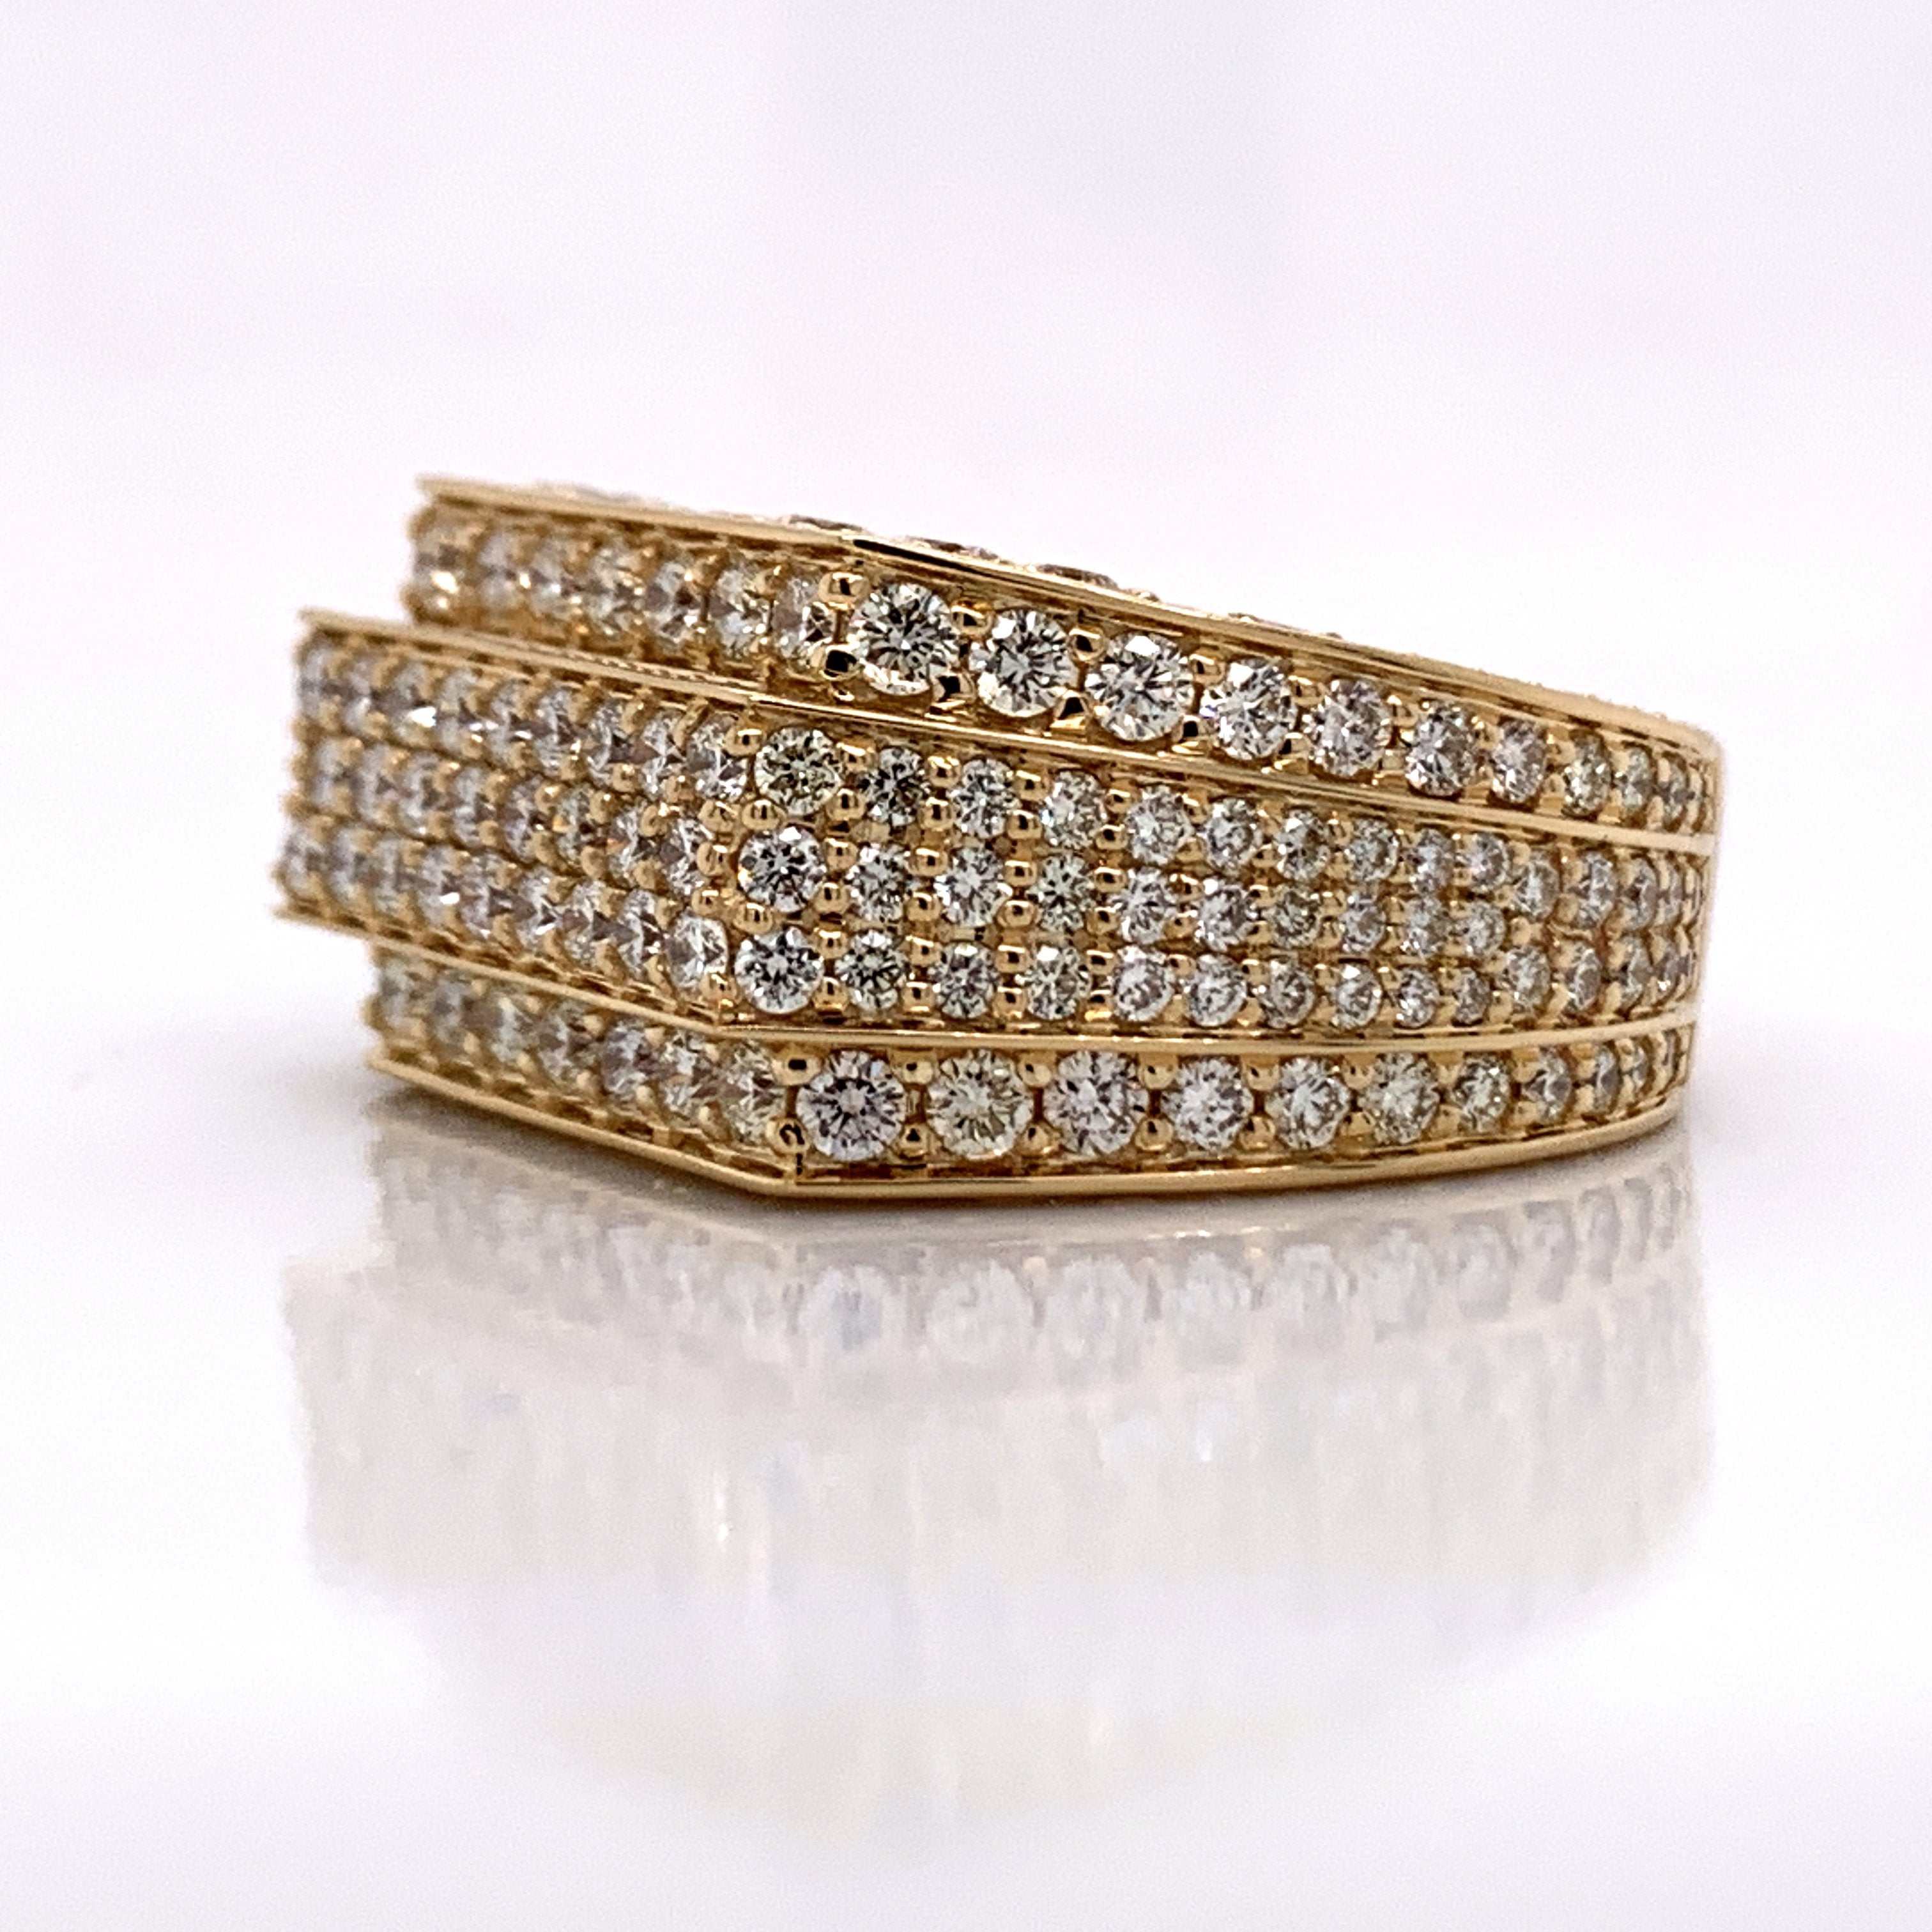 4.75 CT. Diamond Ring in 14K Gold - White Carat Diamonds 